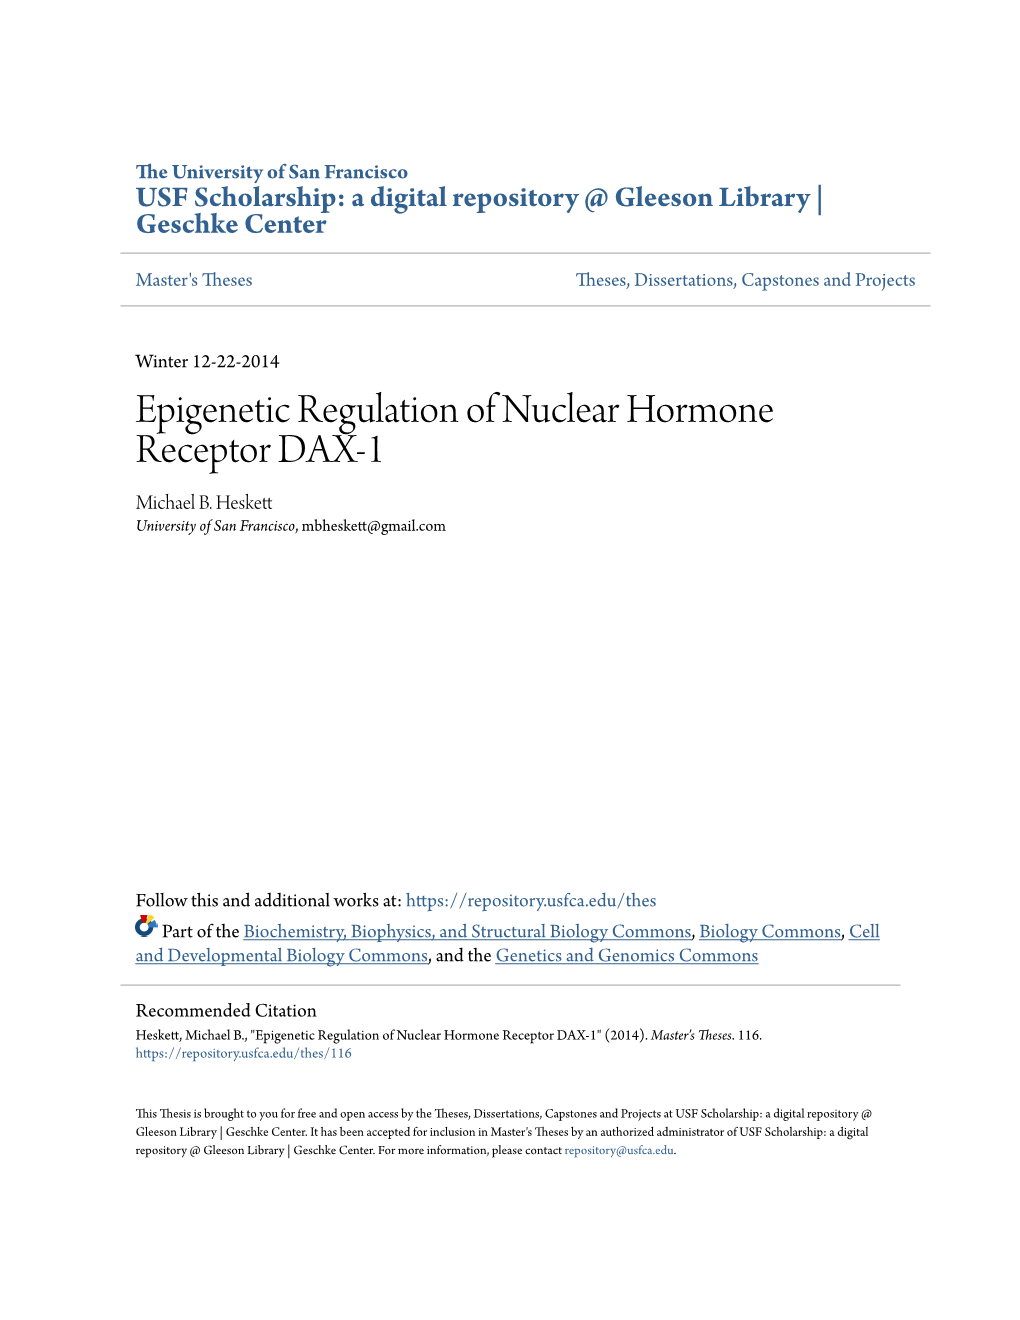 Epigenetic Regulation of Nuclear Hormone Receptor DAX-1 Michael B